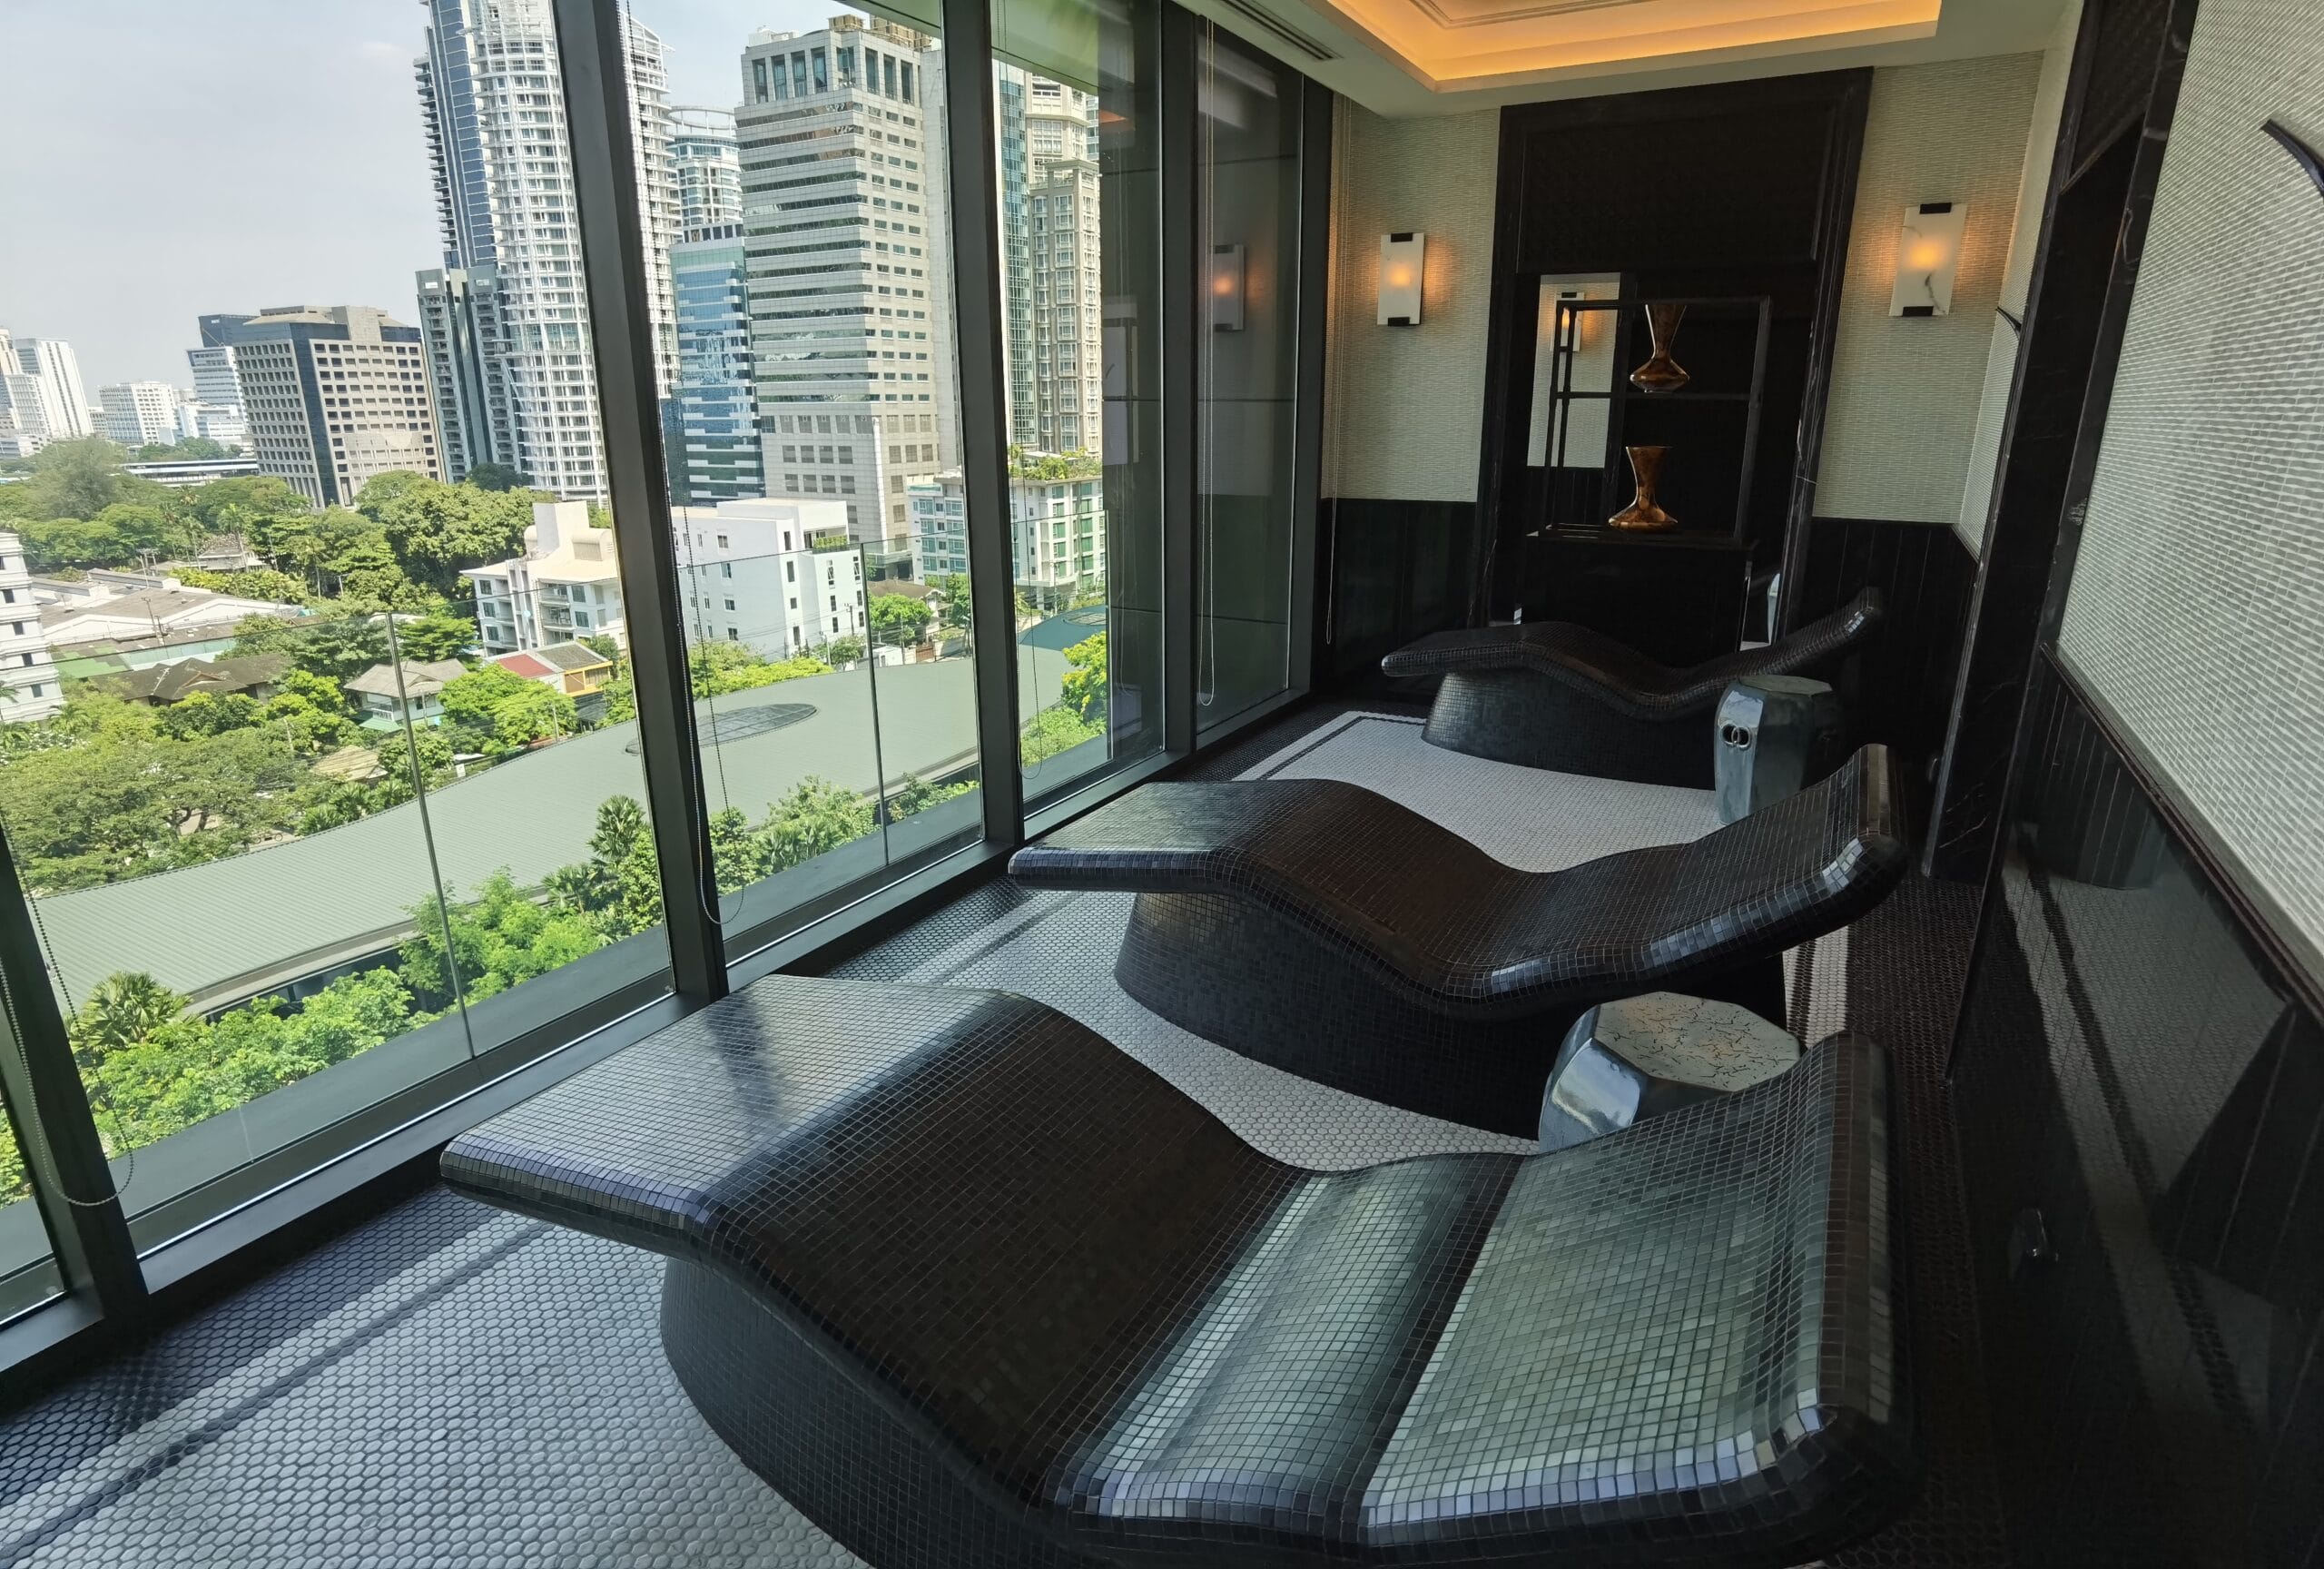 Sindhorn Kempinski Hotel Bangkok 曼谷新浩凱賓斯基酒店